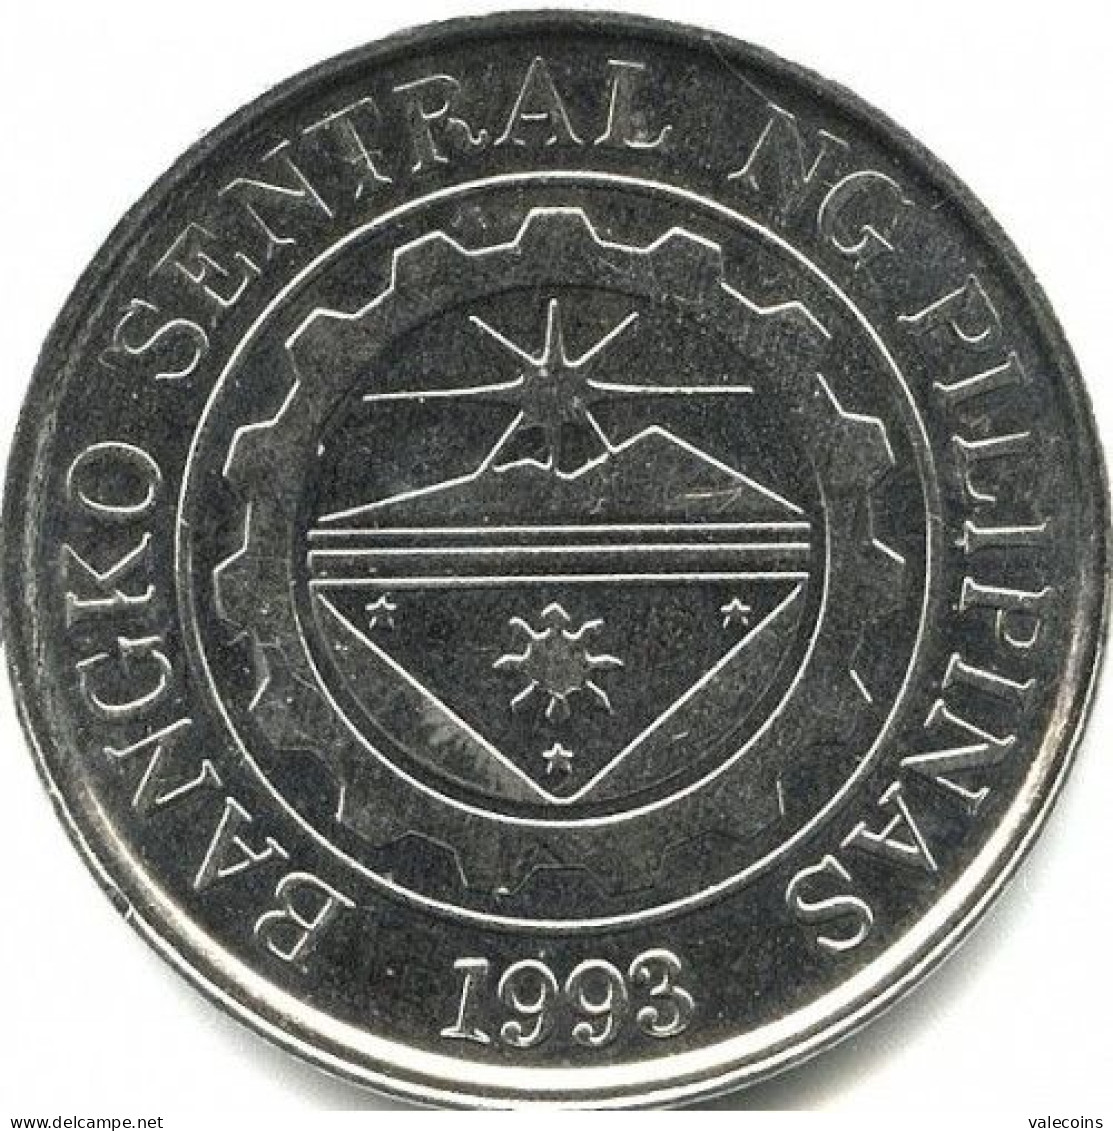 FILIPPINE PILIPINAS PHILIPPINES - 2015 - 1 Piso - KM 269a - Coin UNC - Philippines